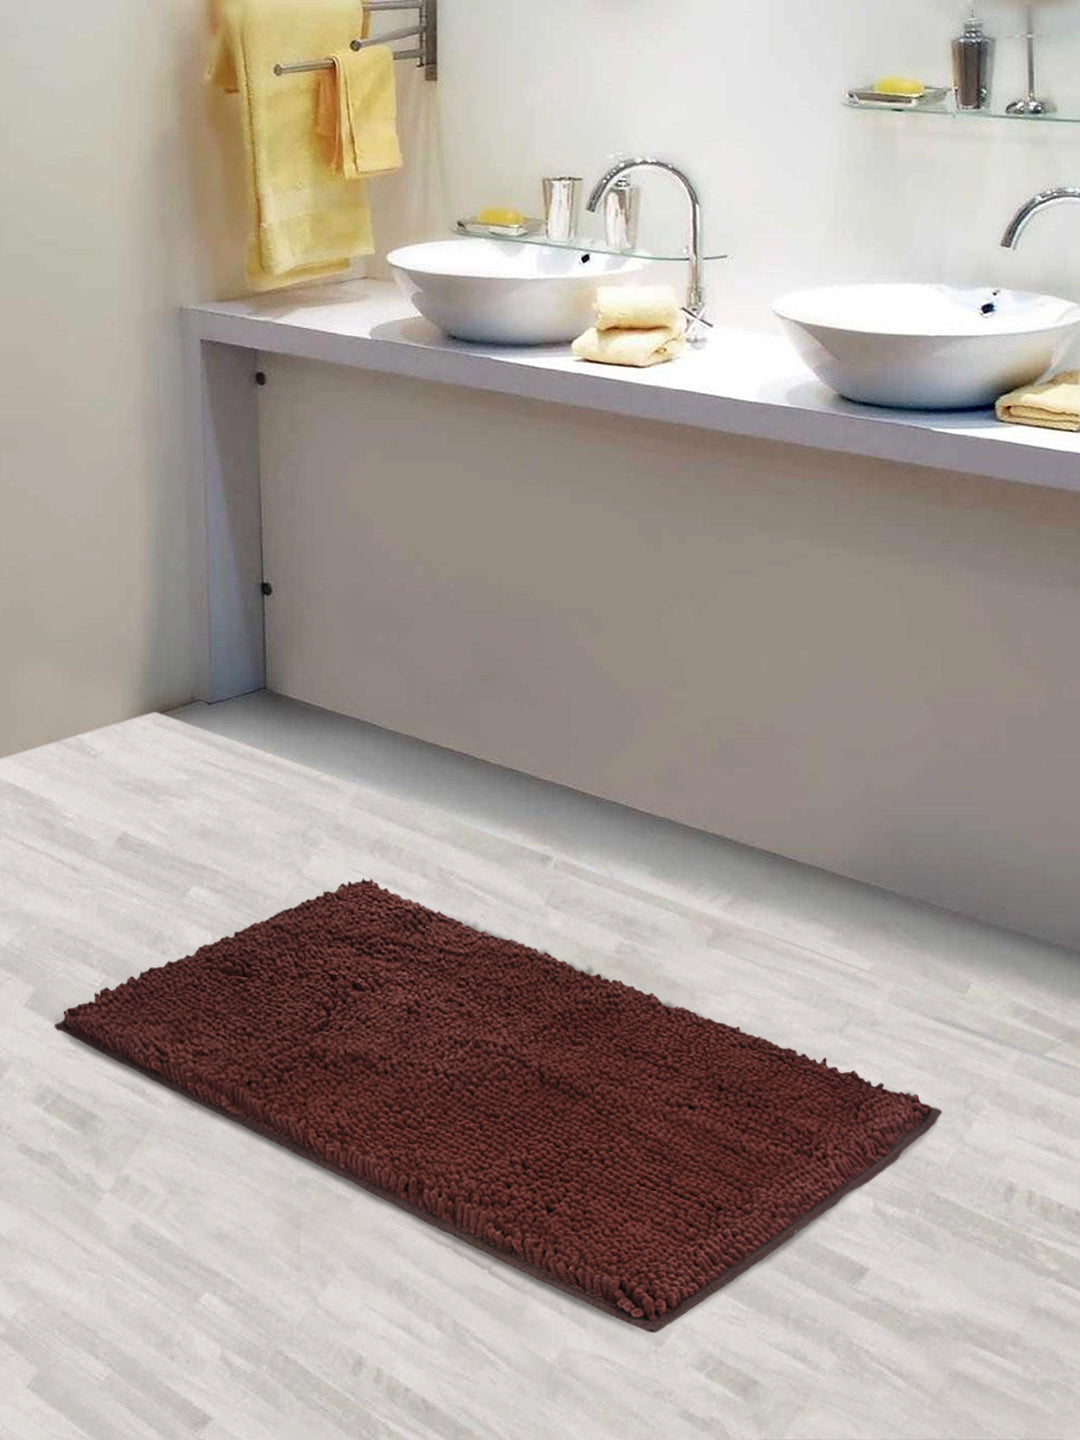 Lushomes Bathroom Mat, 2200 GSM Floor, bath mat Mat with High Pile Microfiber, anti skid mat for bathroom Floor, bath mat Non Slip Anti Slip, Premium Quality (20 x 30 inches, Single Pc, Dark Brown)